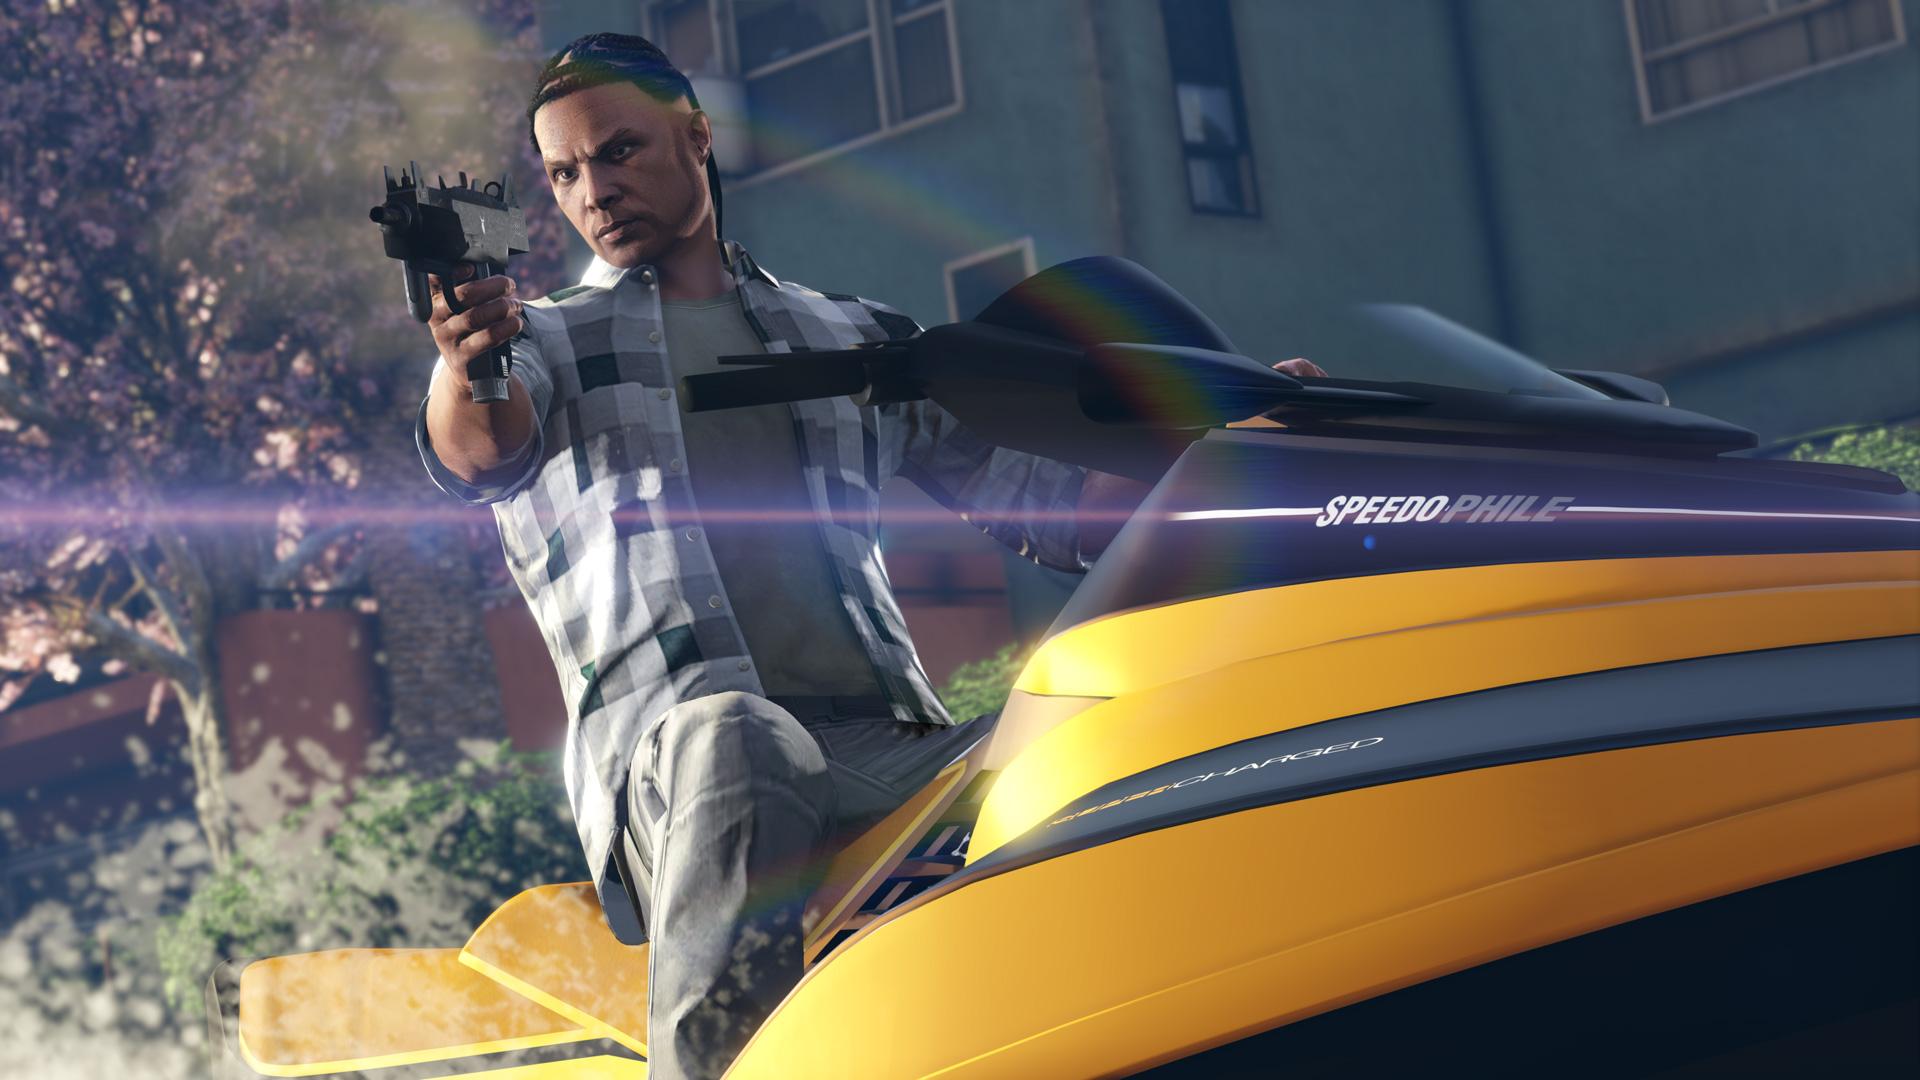 GTA Online player shoots gun on jet ski